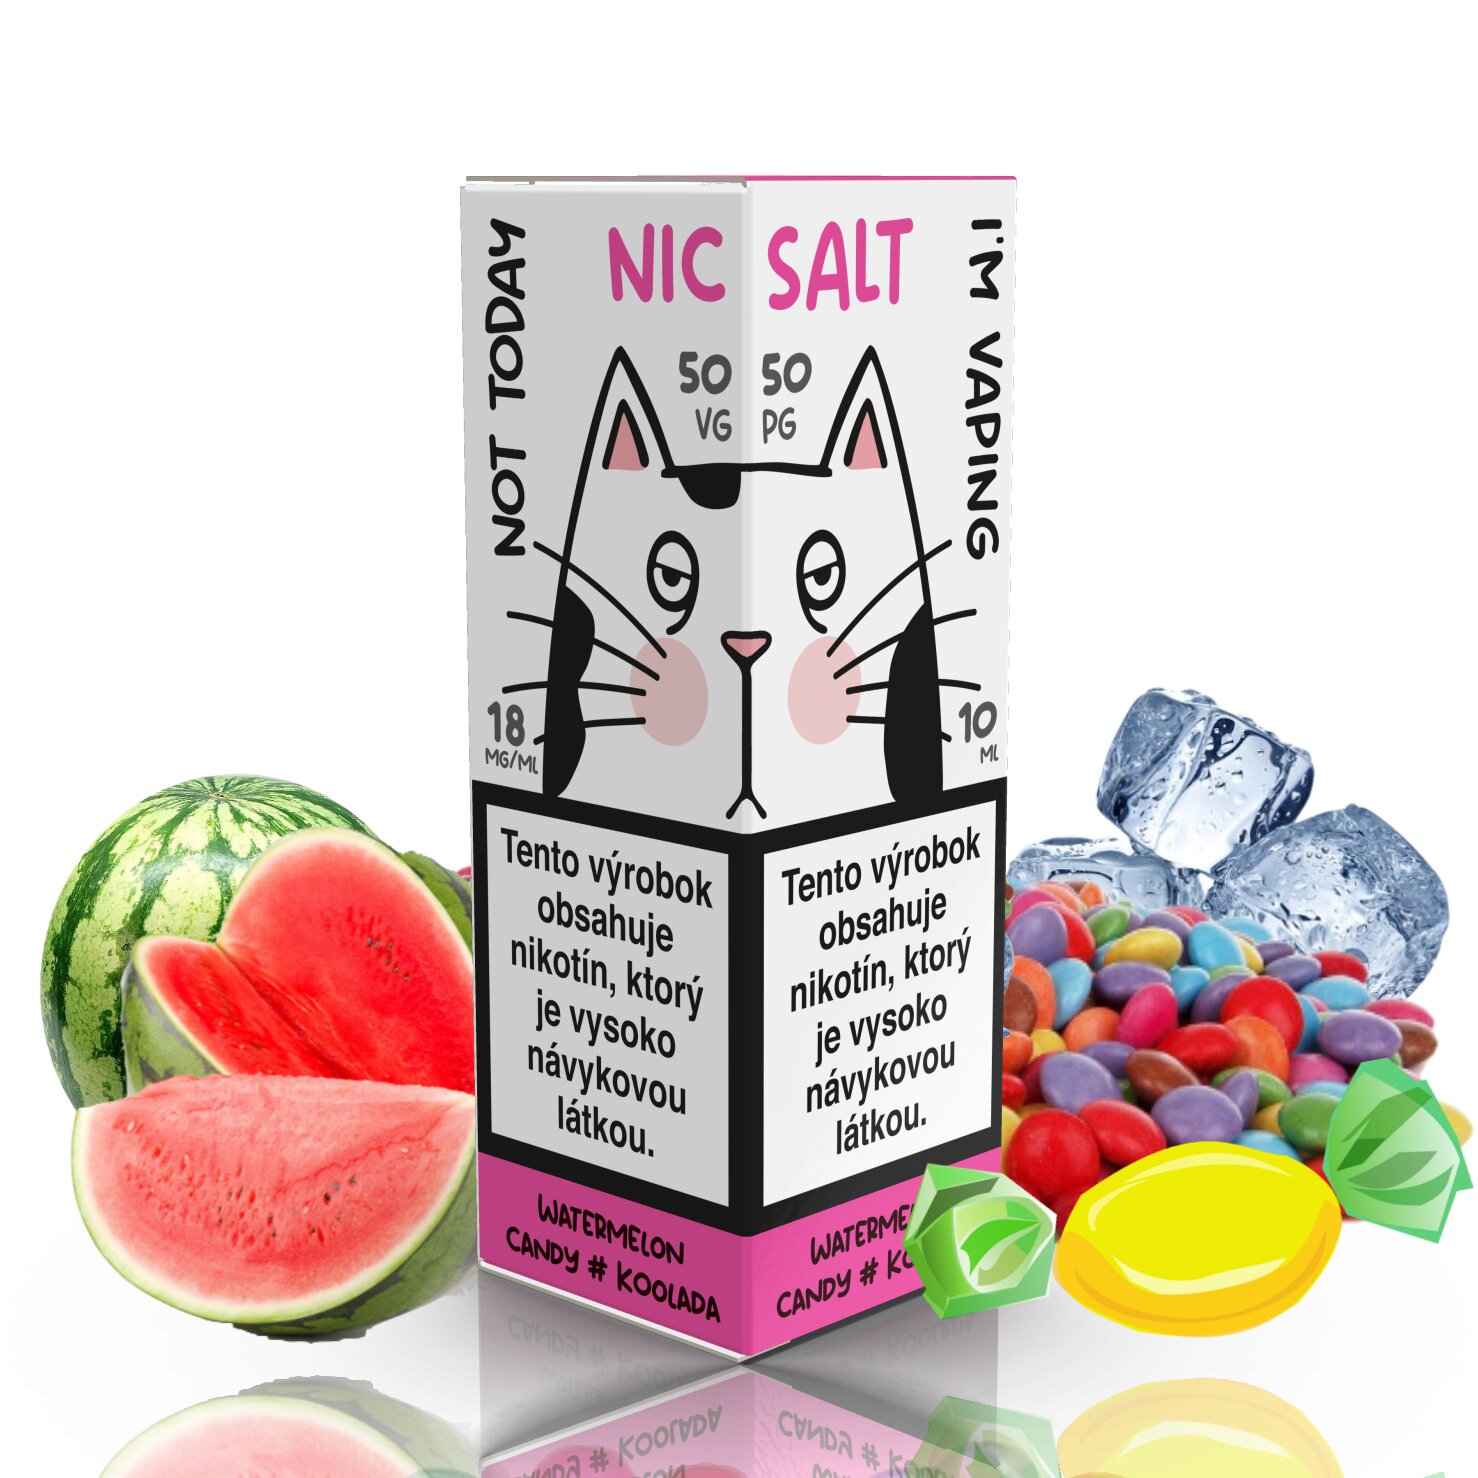 10 ml Not Today Salt - Watermelon Candy Koolada 18 mg/ml 